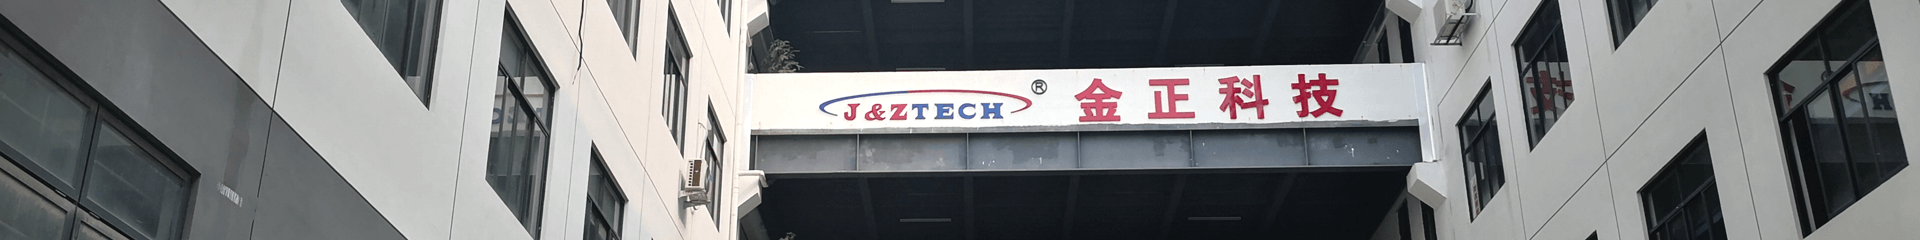 Professional LED Strobe Light manufacturer- J&Z TECH